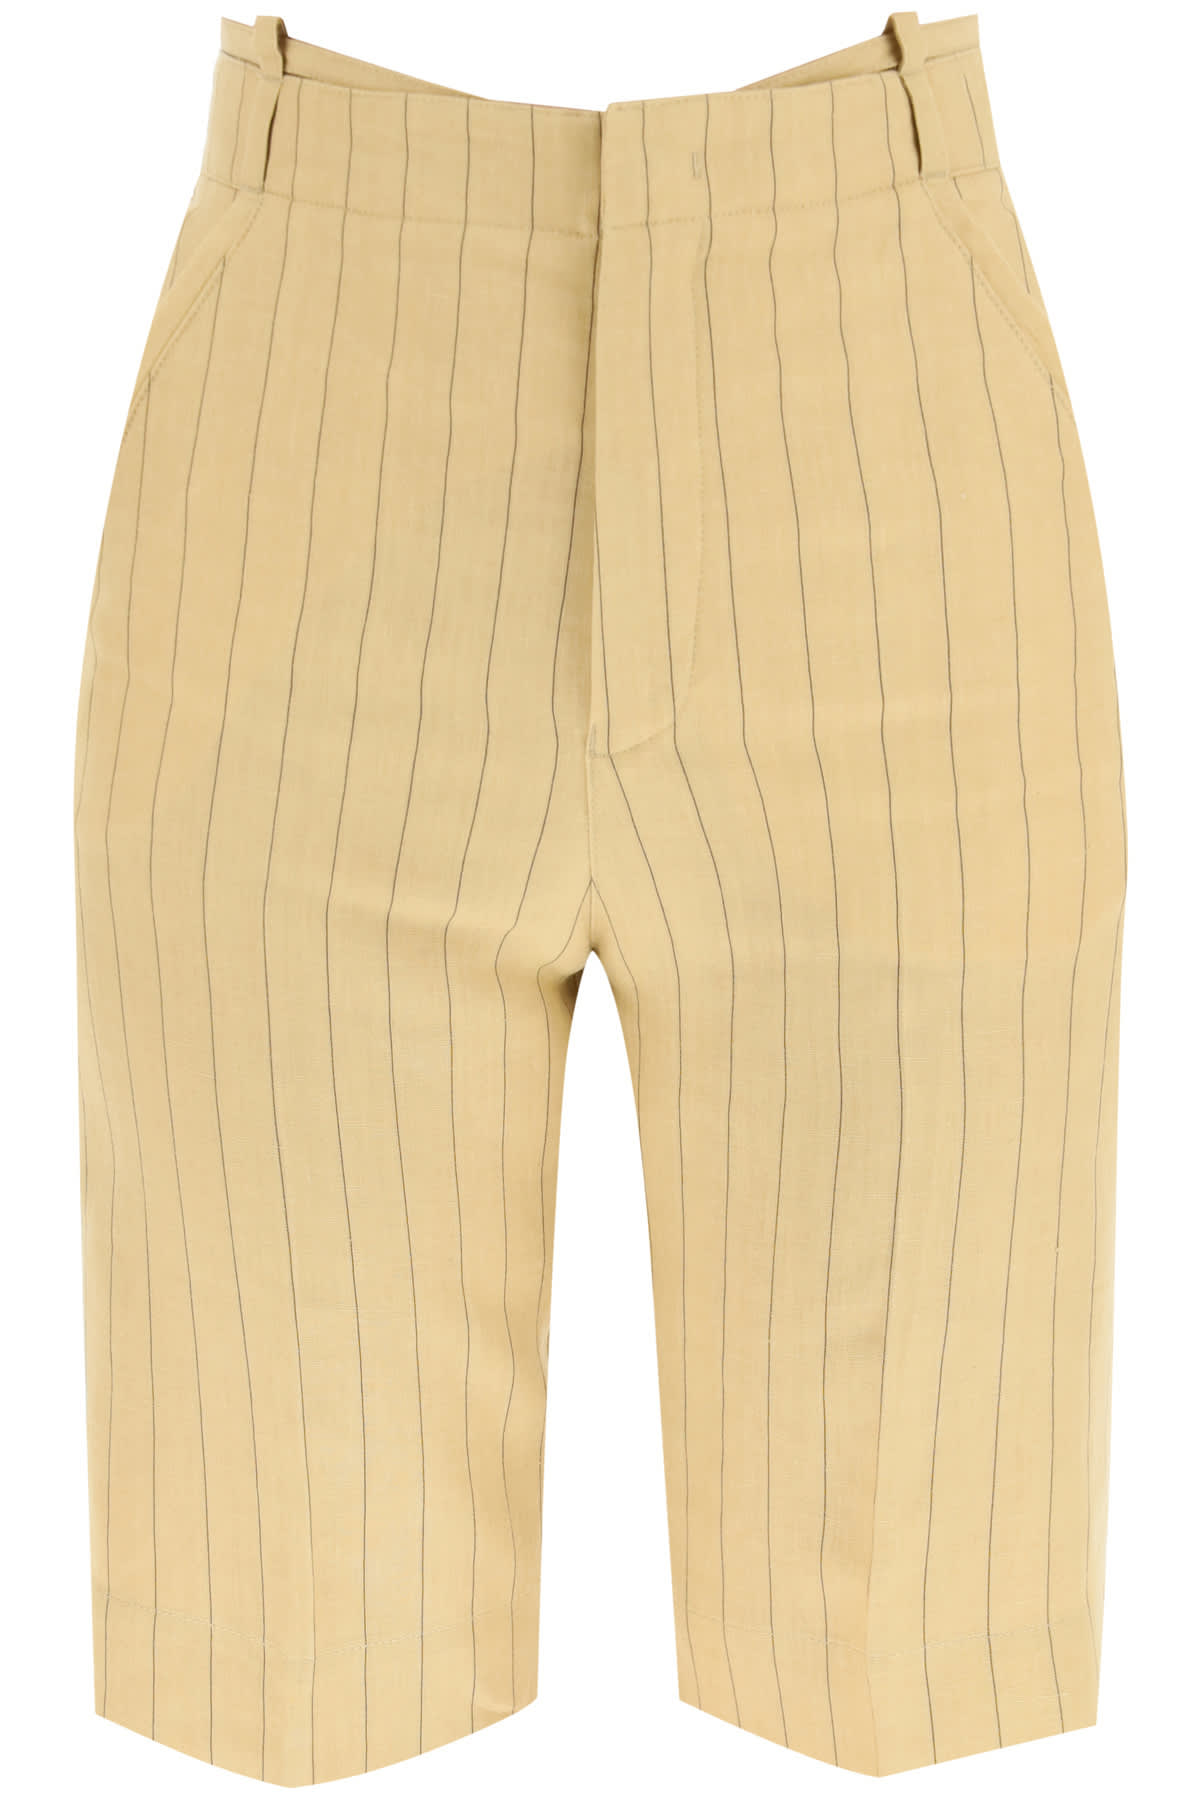 Jacquemus Le Short Gardian Linen Shorts